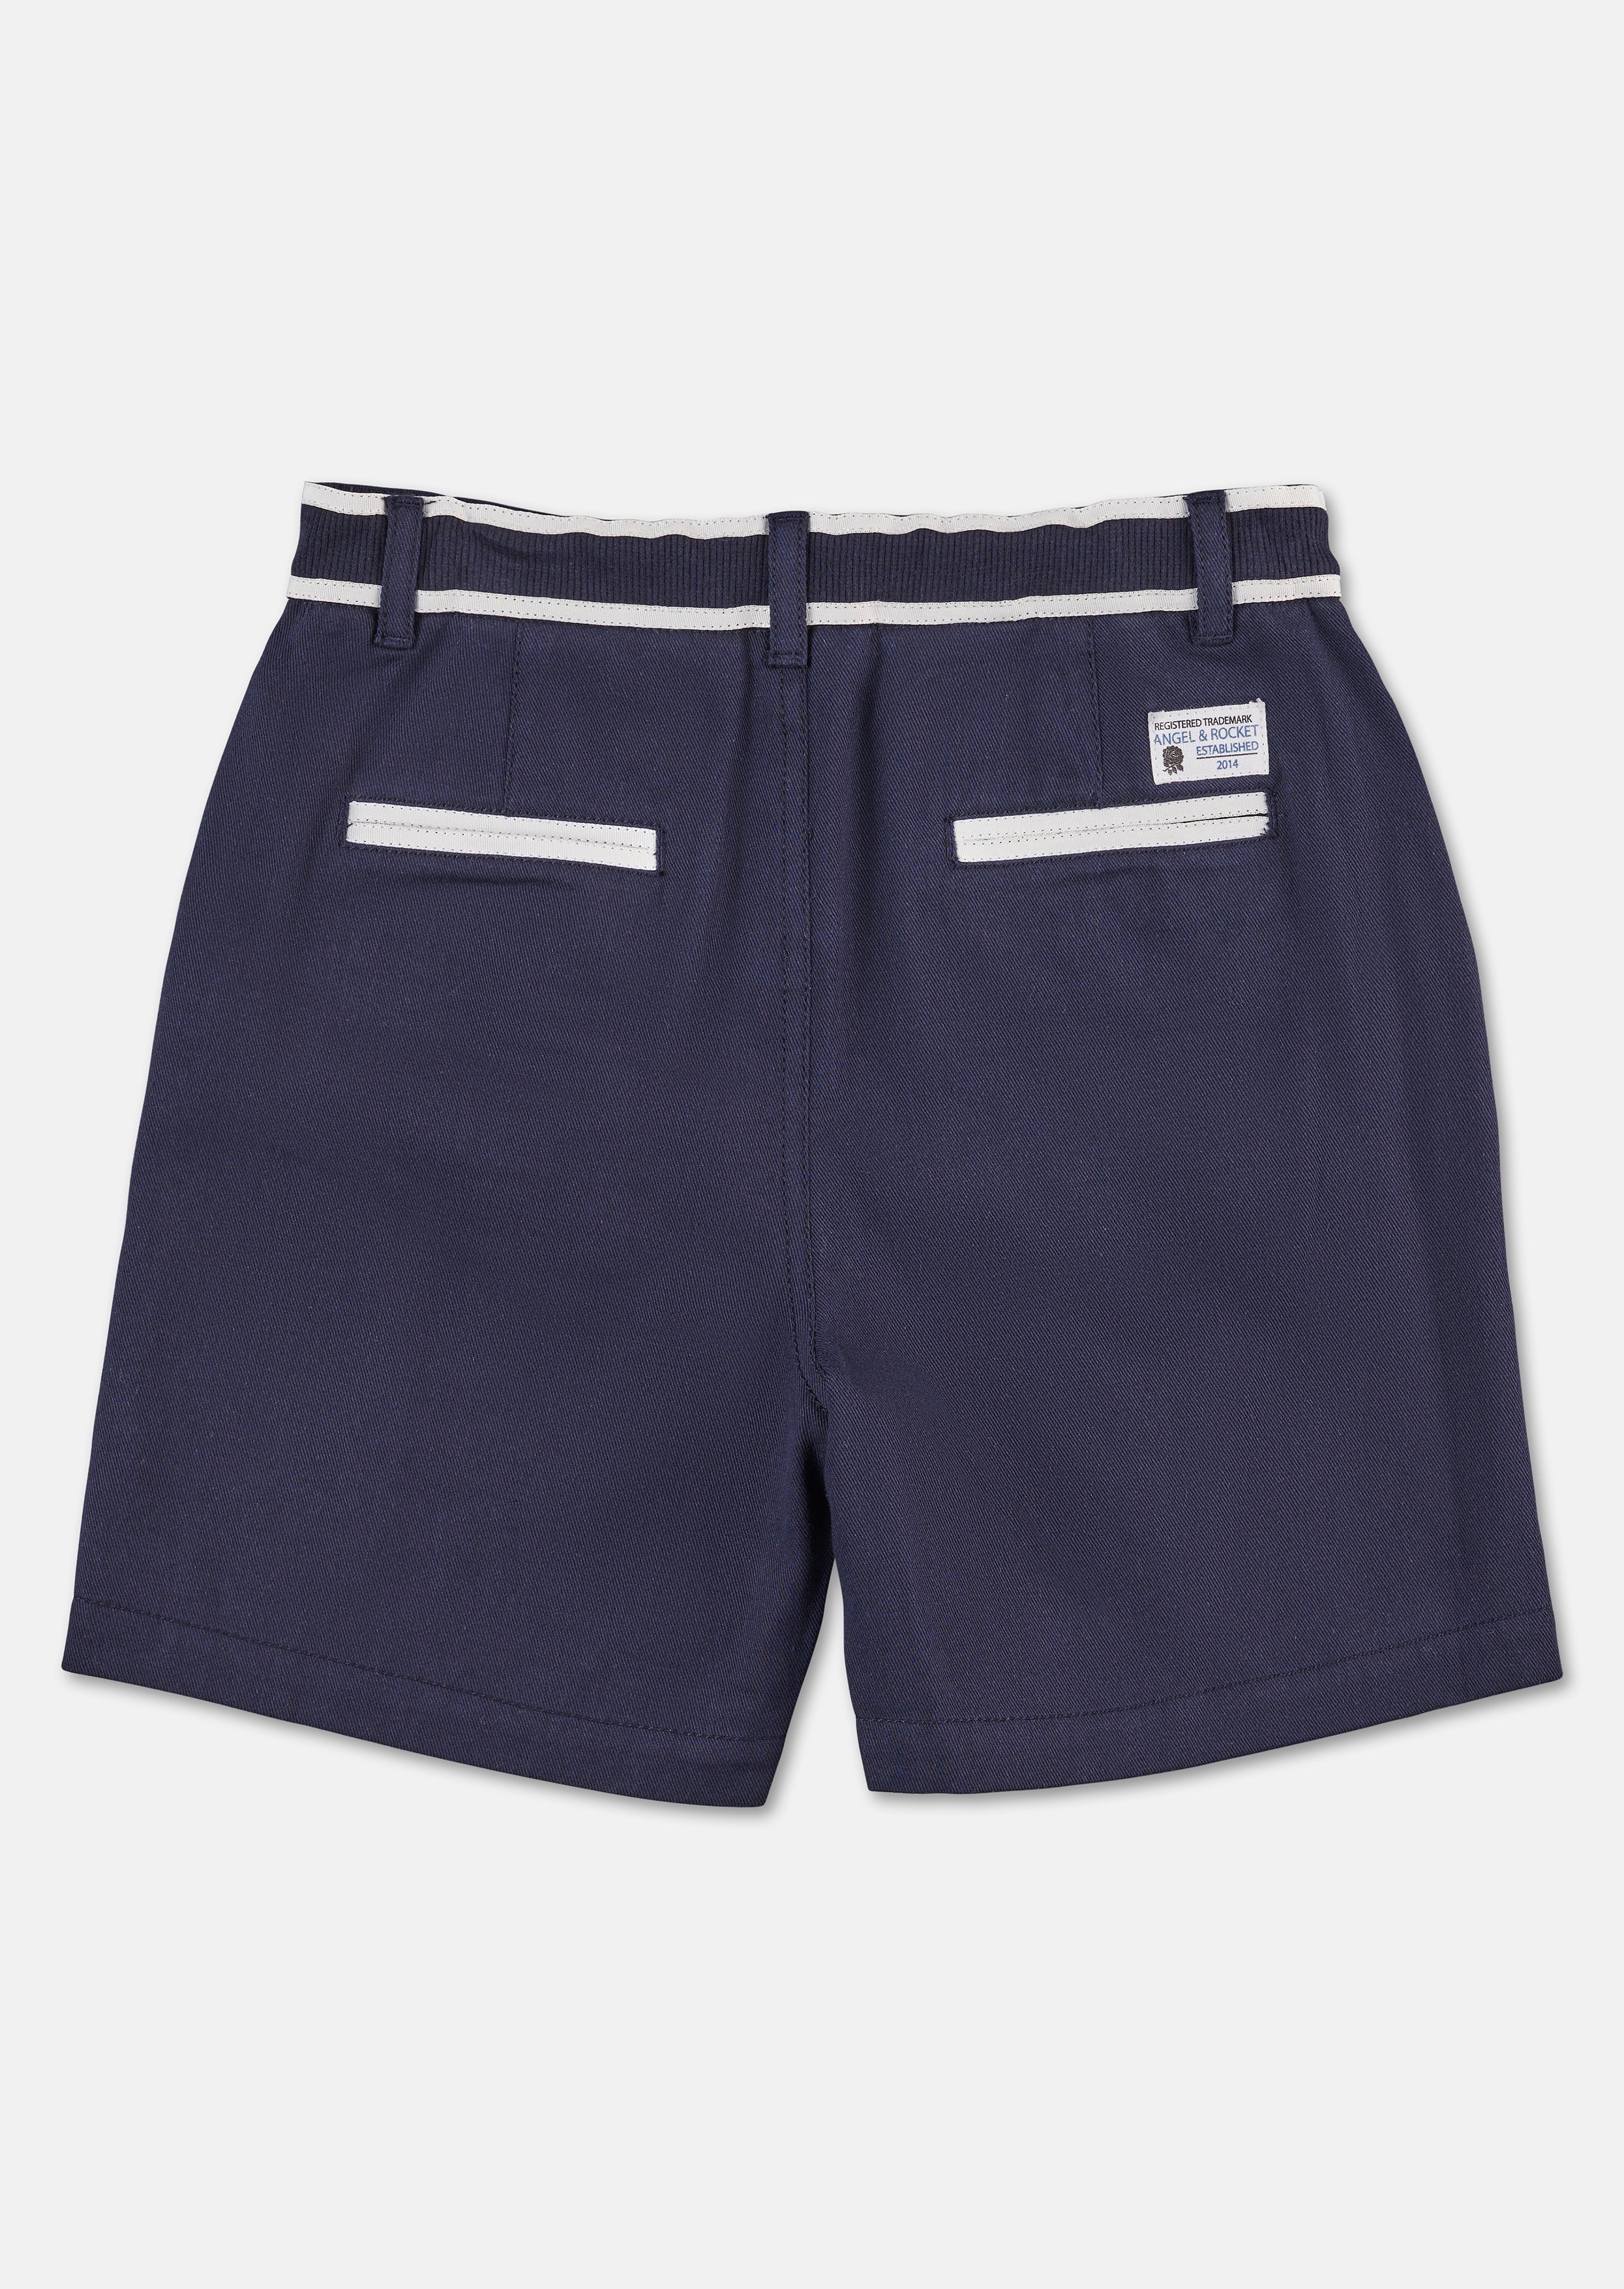 Boys Navy Smart Woven Shorts